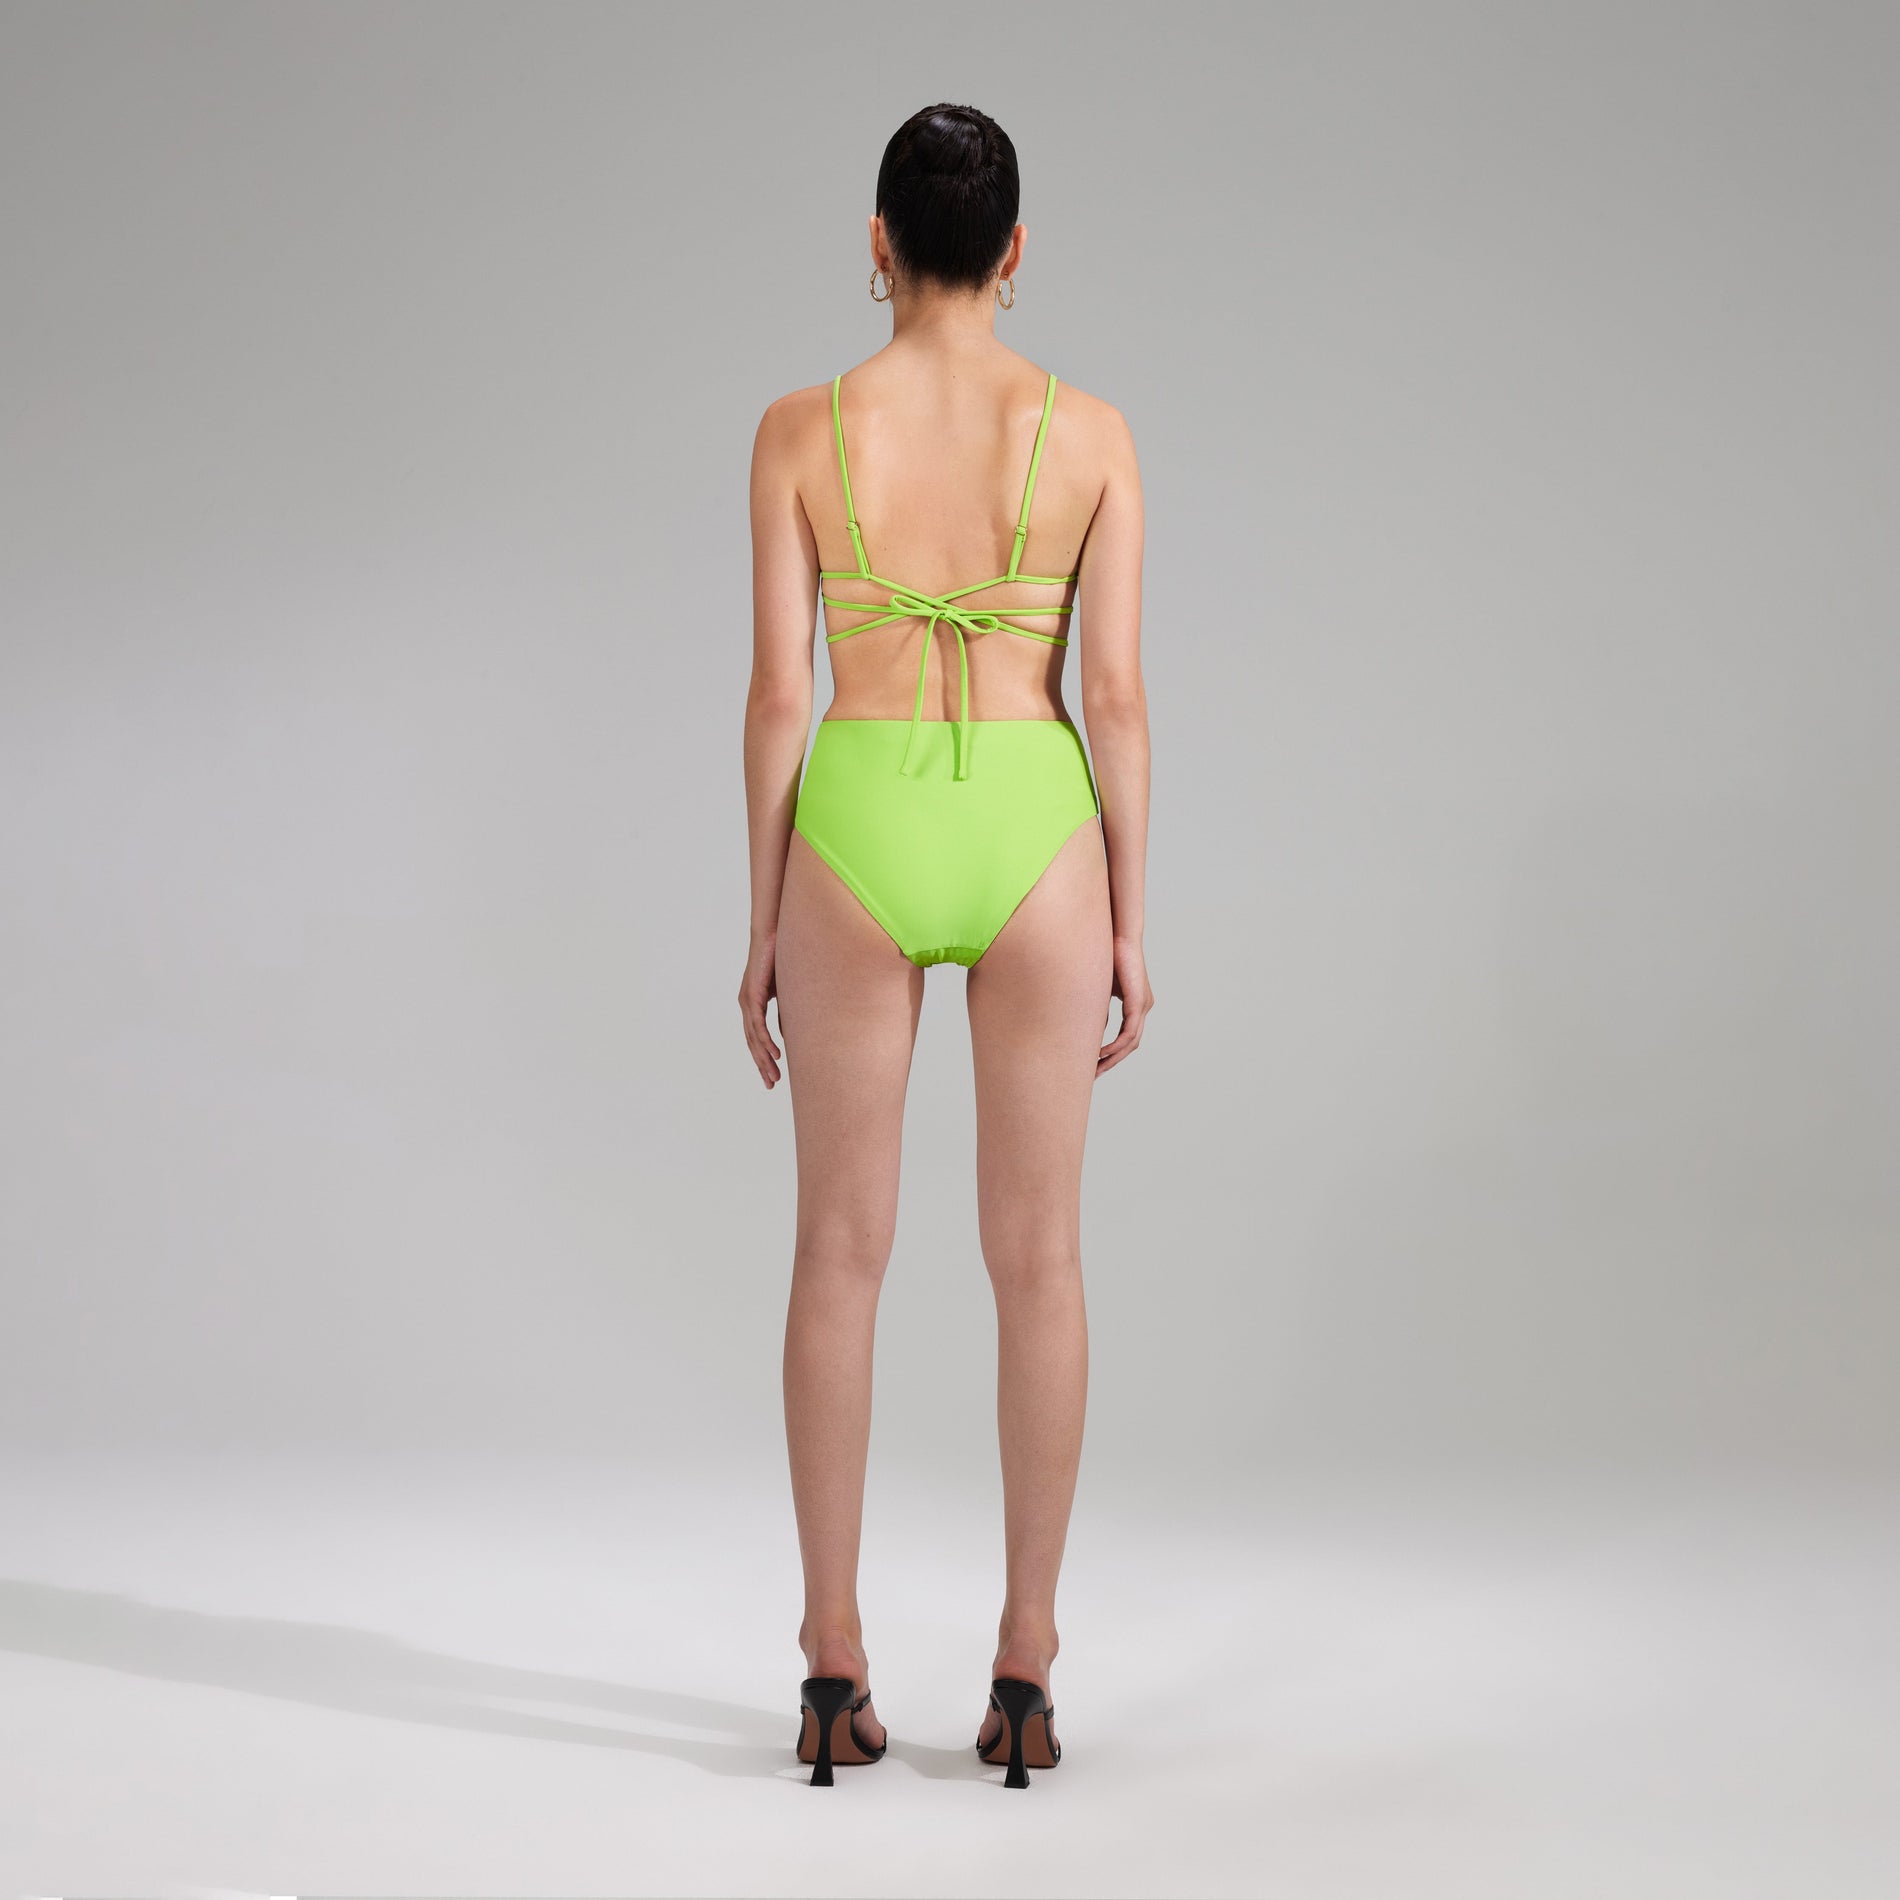 A woman wearing the Green High Waisted Bikini Brief